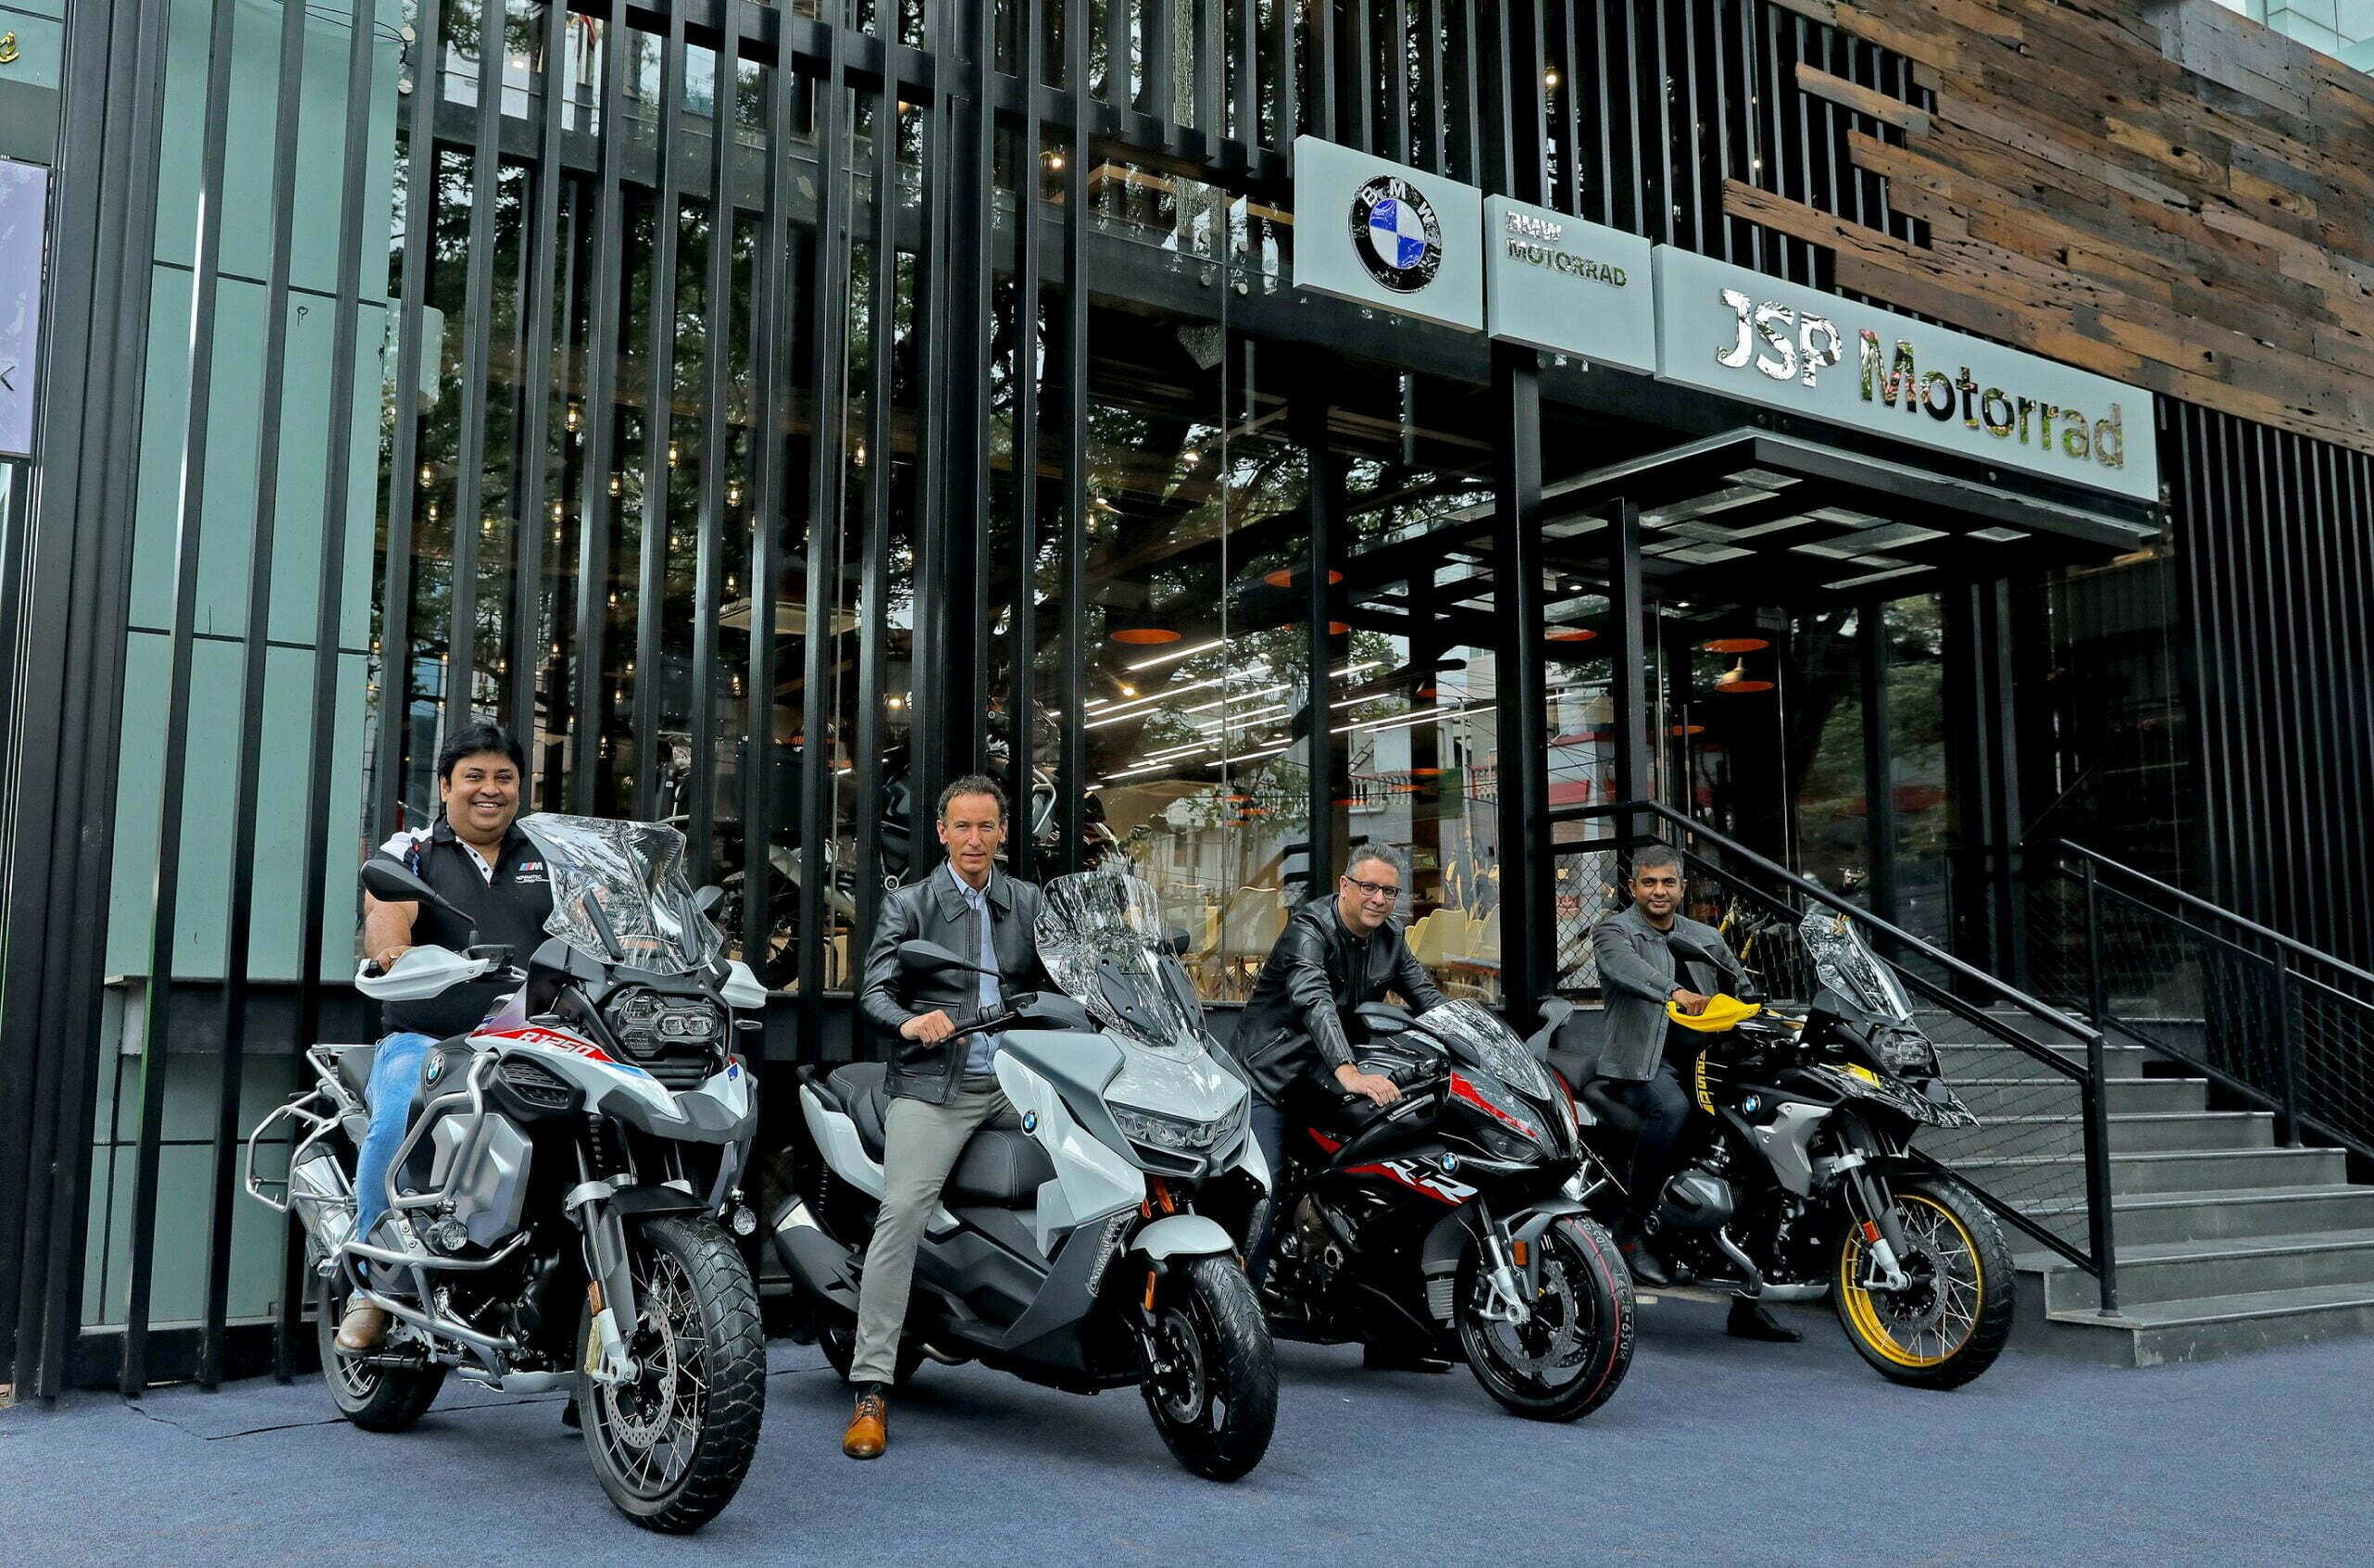 JSP Motorrad Second BMW Motorrad Dealer Partner in Bengaluru